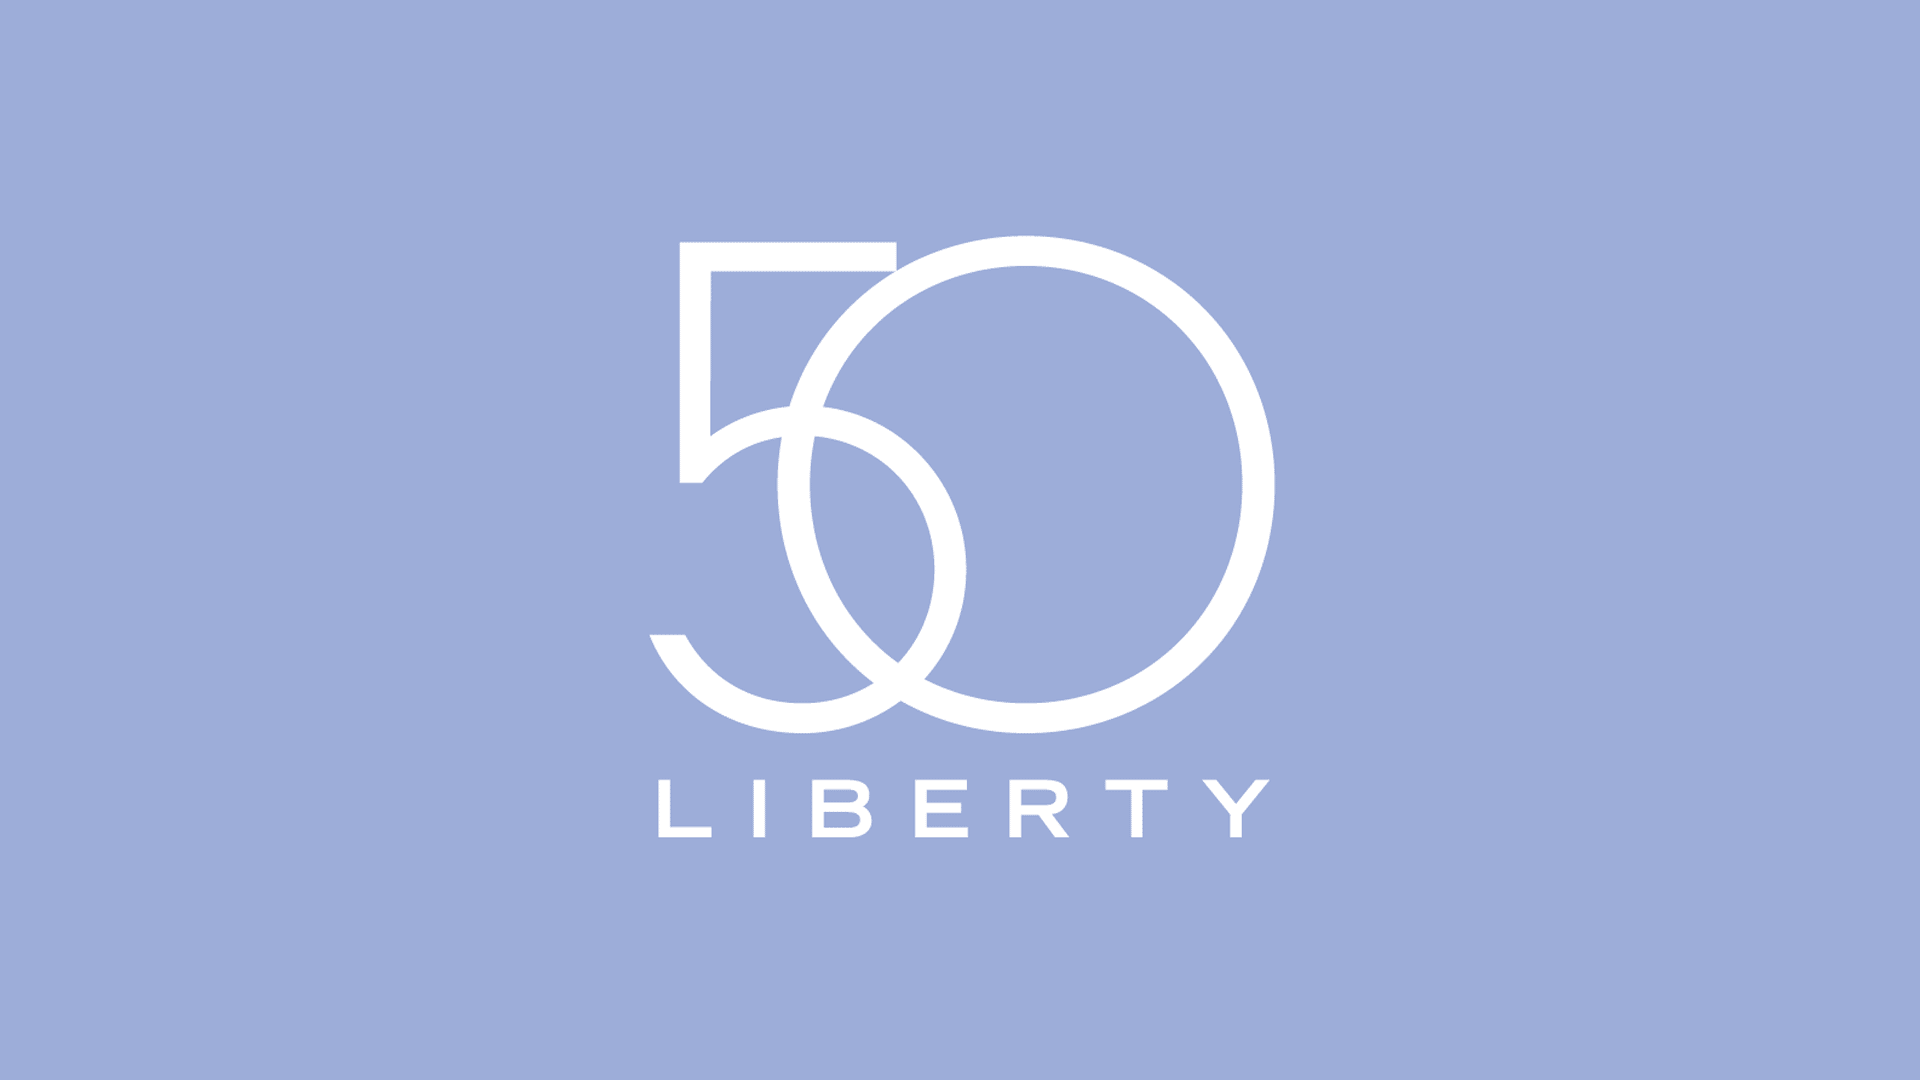 50 Liberty identity and logo on light blue background